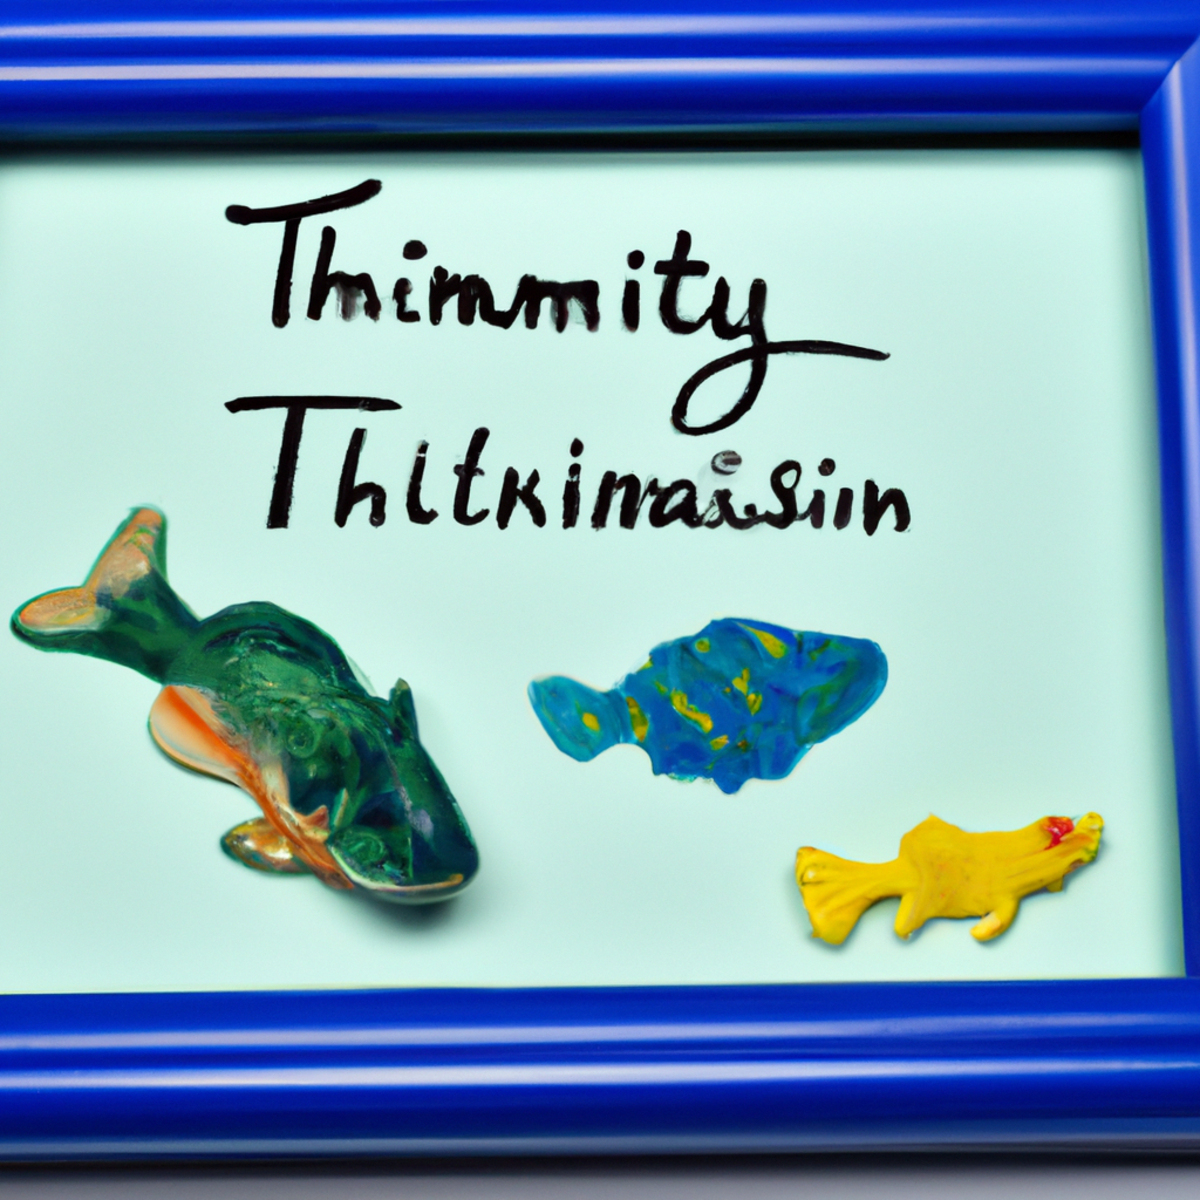 Photo illustrating Trimethylaminuria (Fish Odor Syndrome) symptoms.